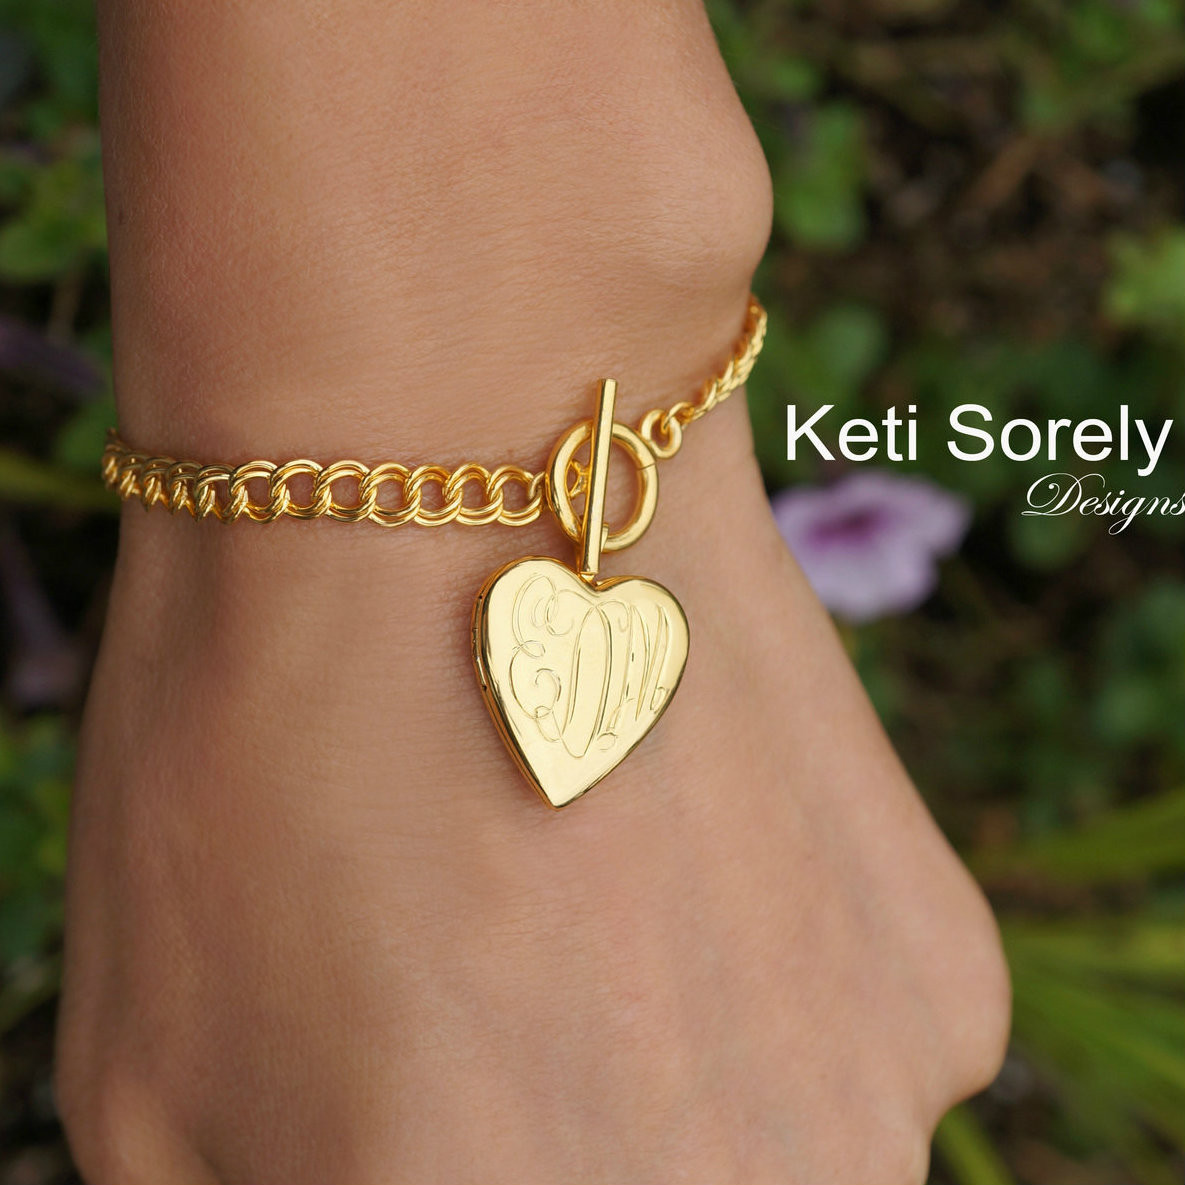 Buy Heart Charm Bracelet, Heart Locket Bracelet, Gift for Her, Heart  Jewelry, Locket Jewelry, Gift for Mom, Silver Bracelet, Silver Heart BR0214  Online in India - Etsy